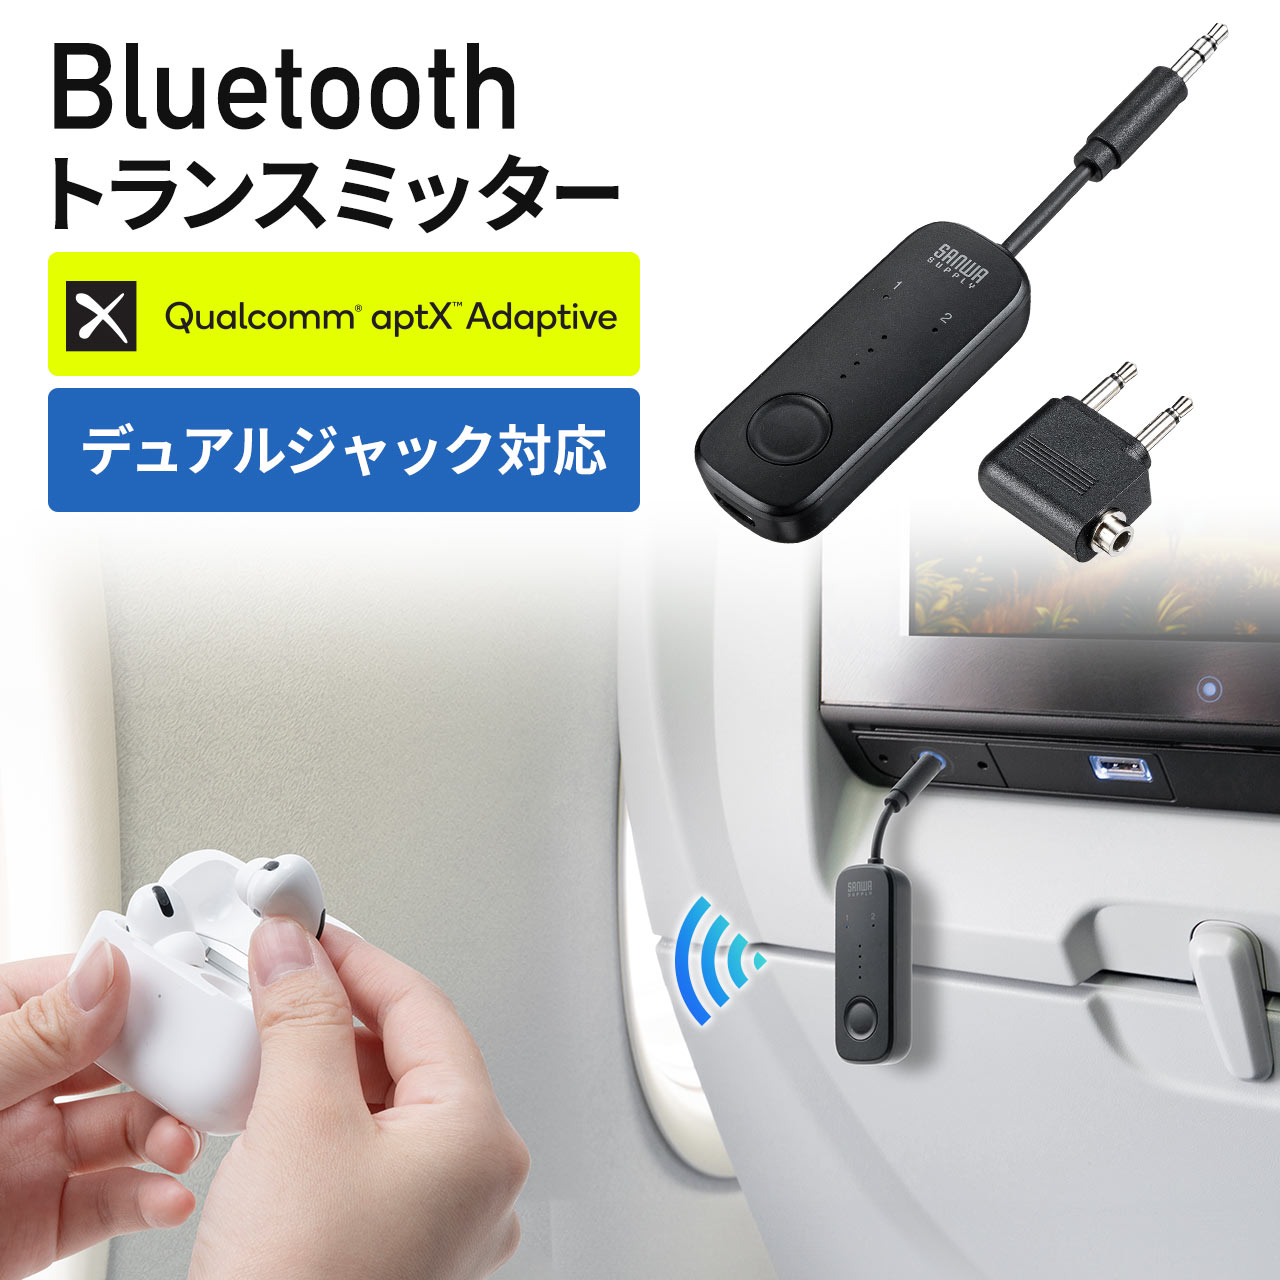 Bluetoothトランスミッター バッテリー内蔵 aptX adaptive対応 3.5mmプラグ 送信機 超小型 飛行機 出張 2台同時接続 高音質 低遅延 オーディオ レシーバー ブルートゥース テレビ オーディオトランスミッター